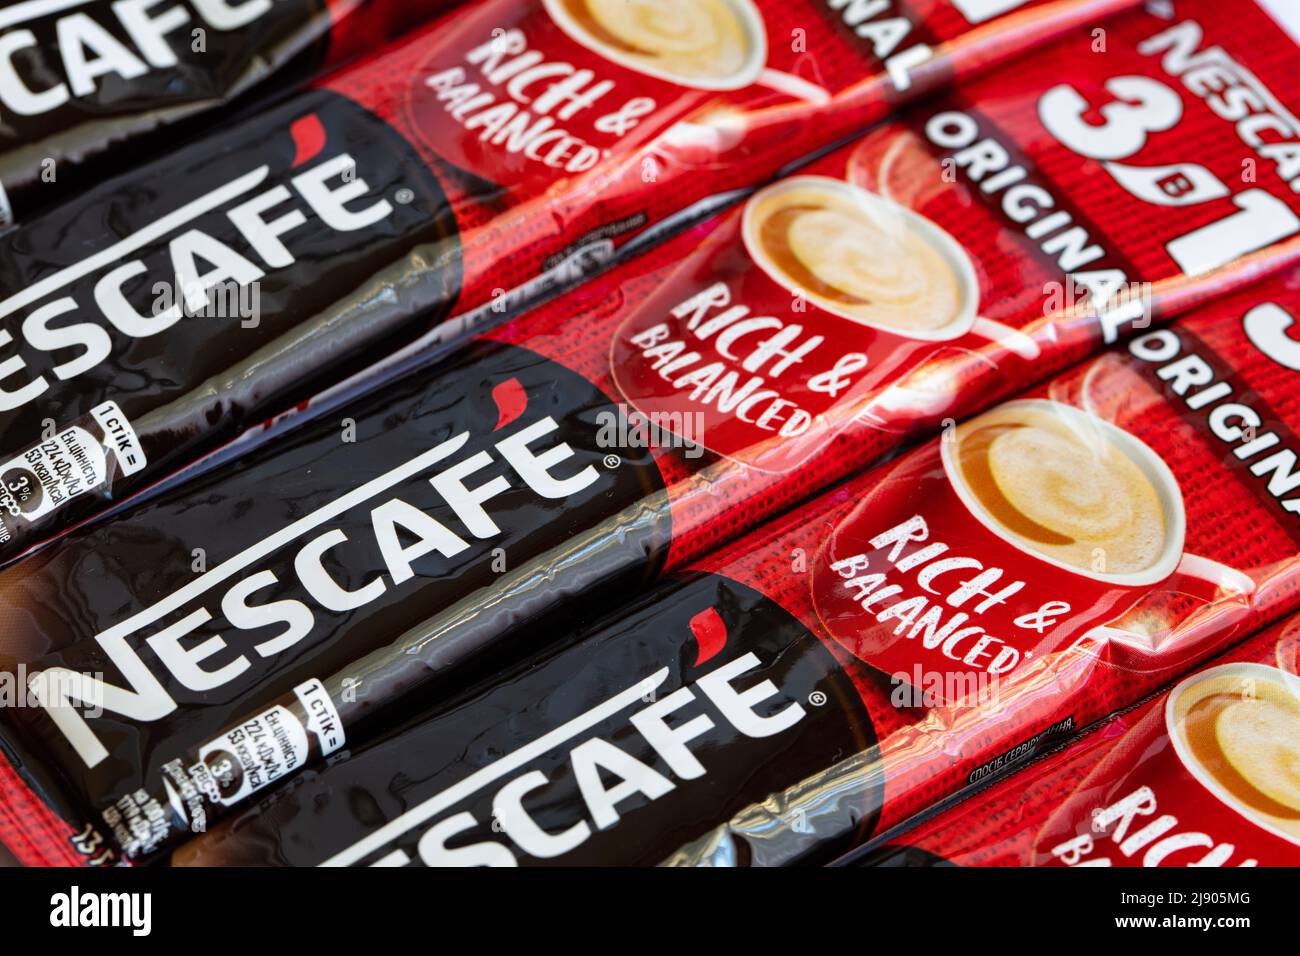 Packet Of Nescafe Cappuccino Coffee Sachets Stock Photo - Alamy